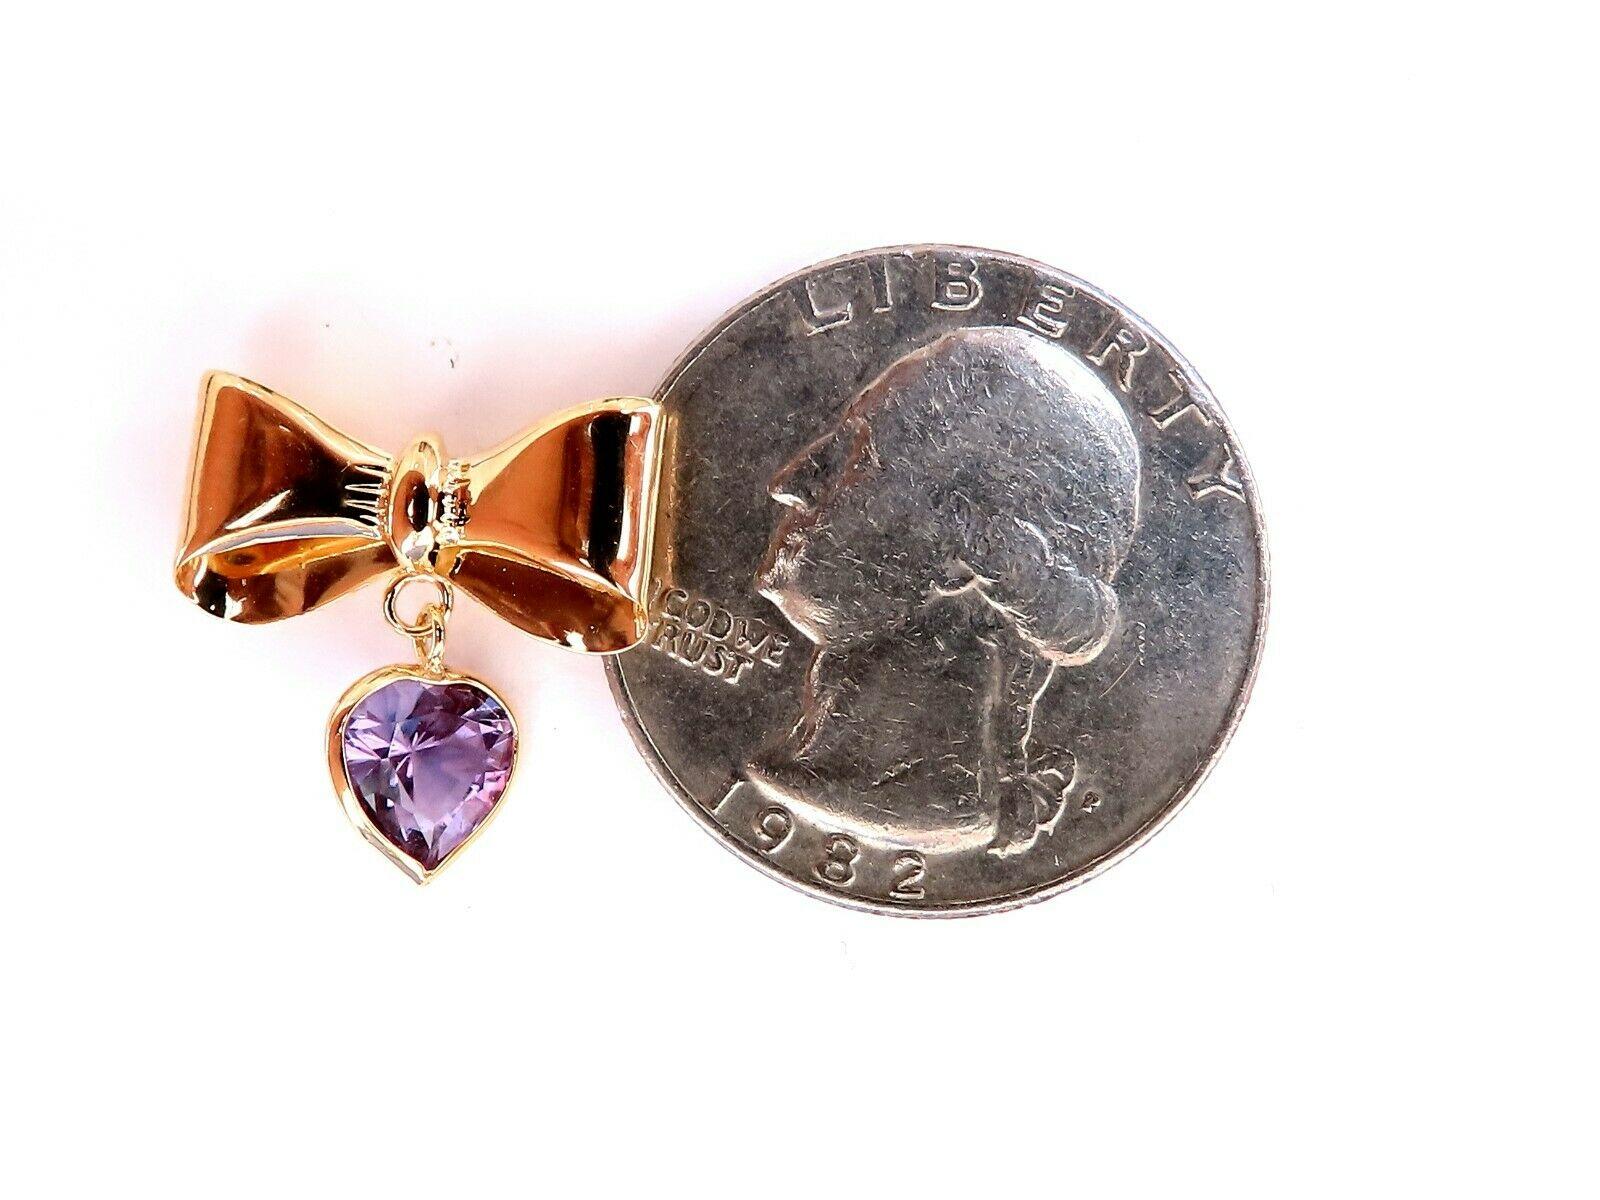 Natural Vivid Purple Amethyst Ribbon Earrings.

2ct natural vivid purple amethyst.

6x6mm each

14 karat yellow gold 1.8 grams

Overall earrings: 17 x17mm

Depth: 4mm